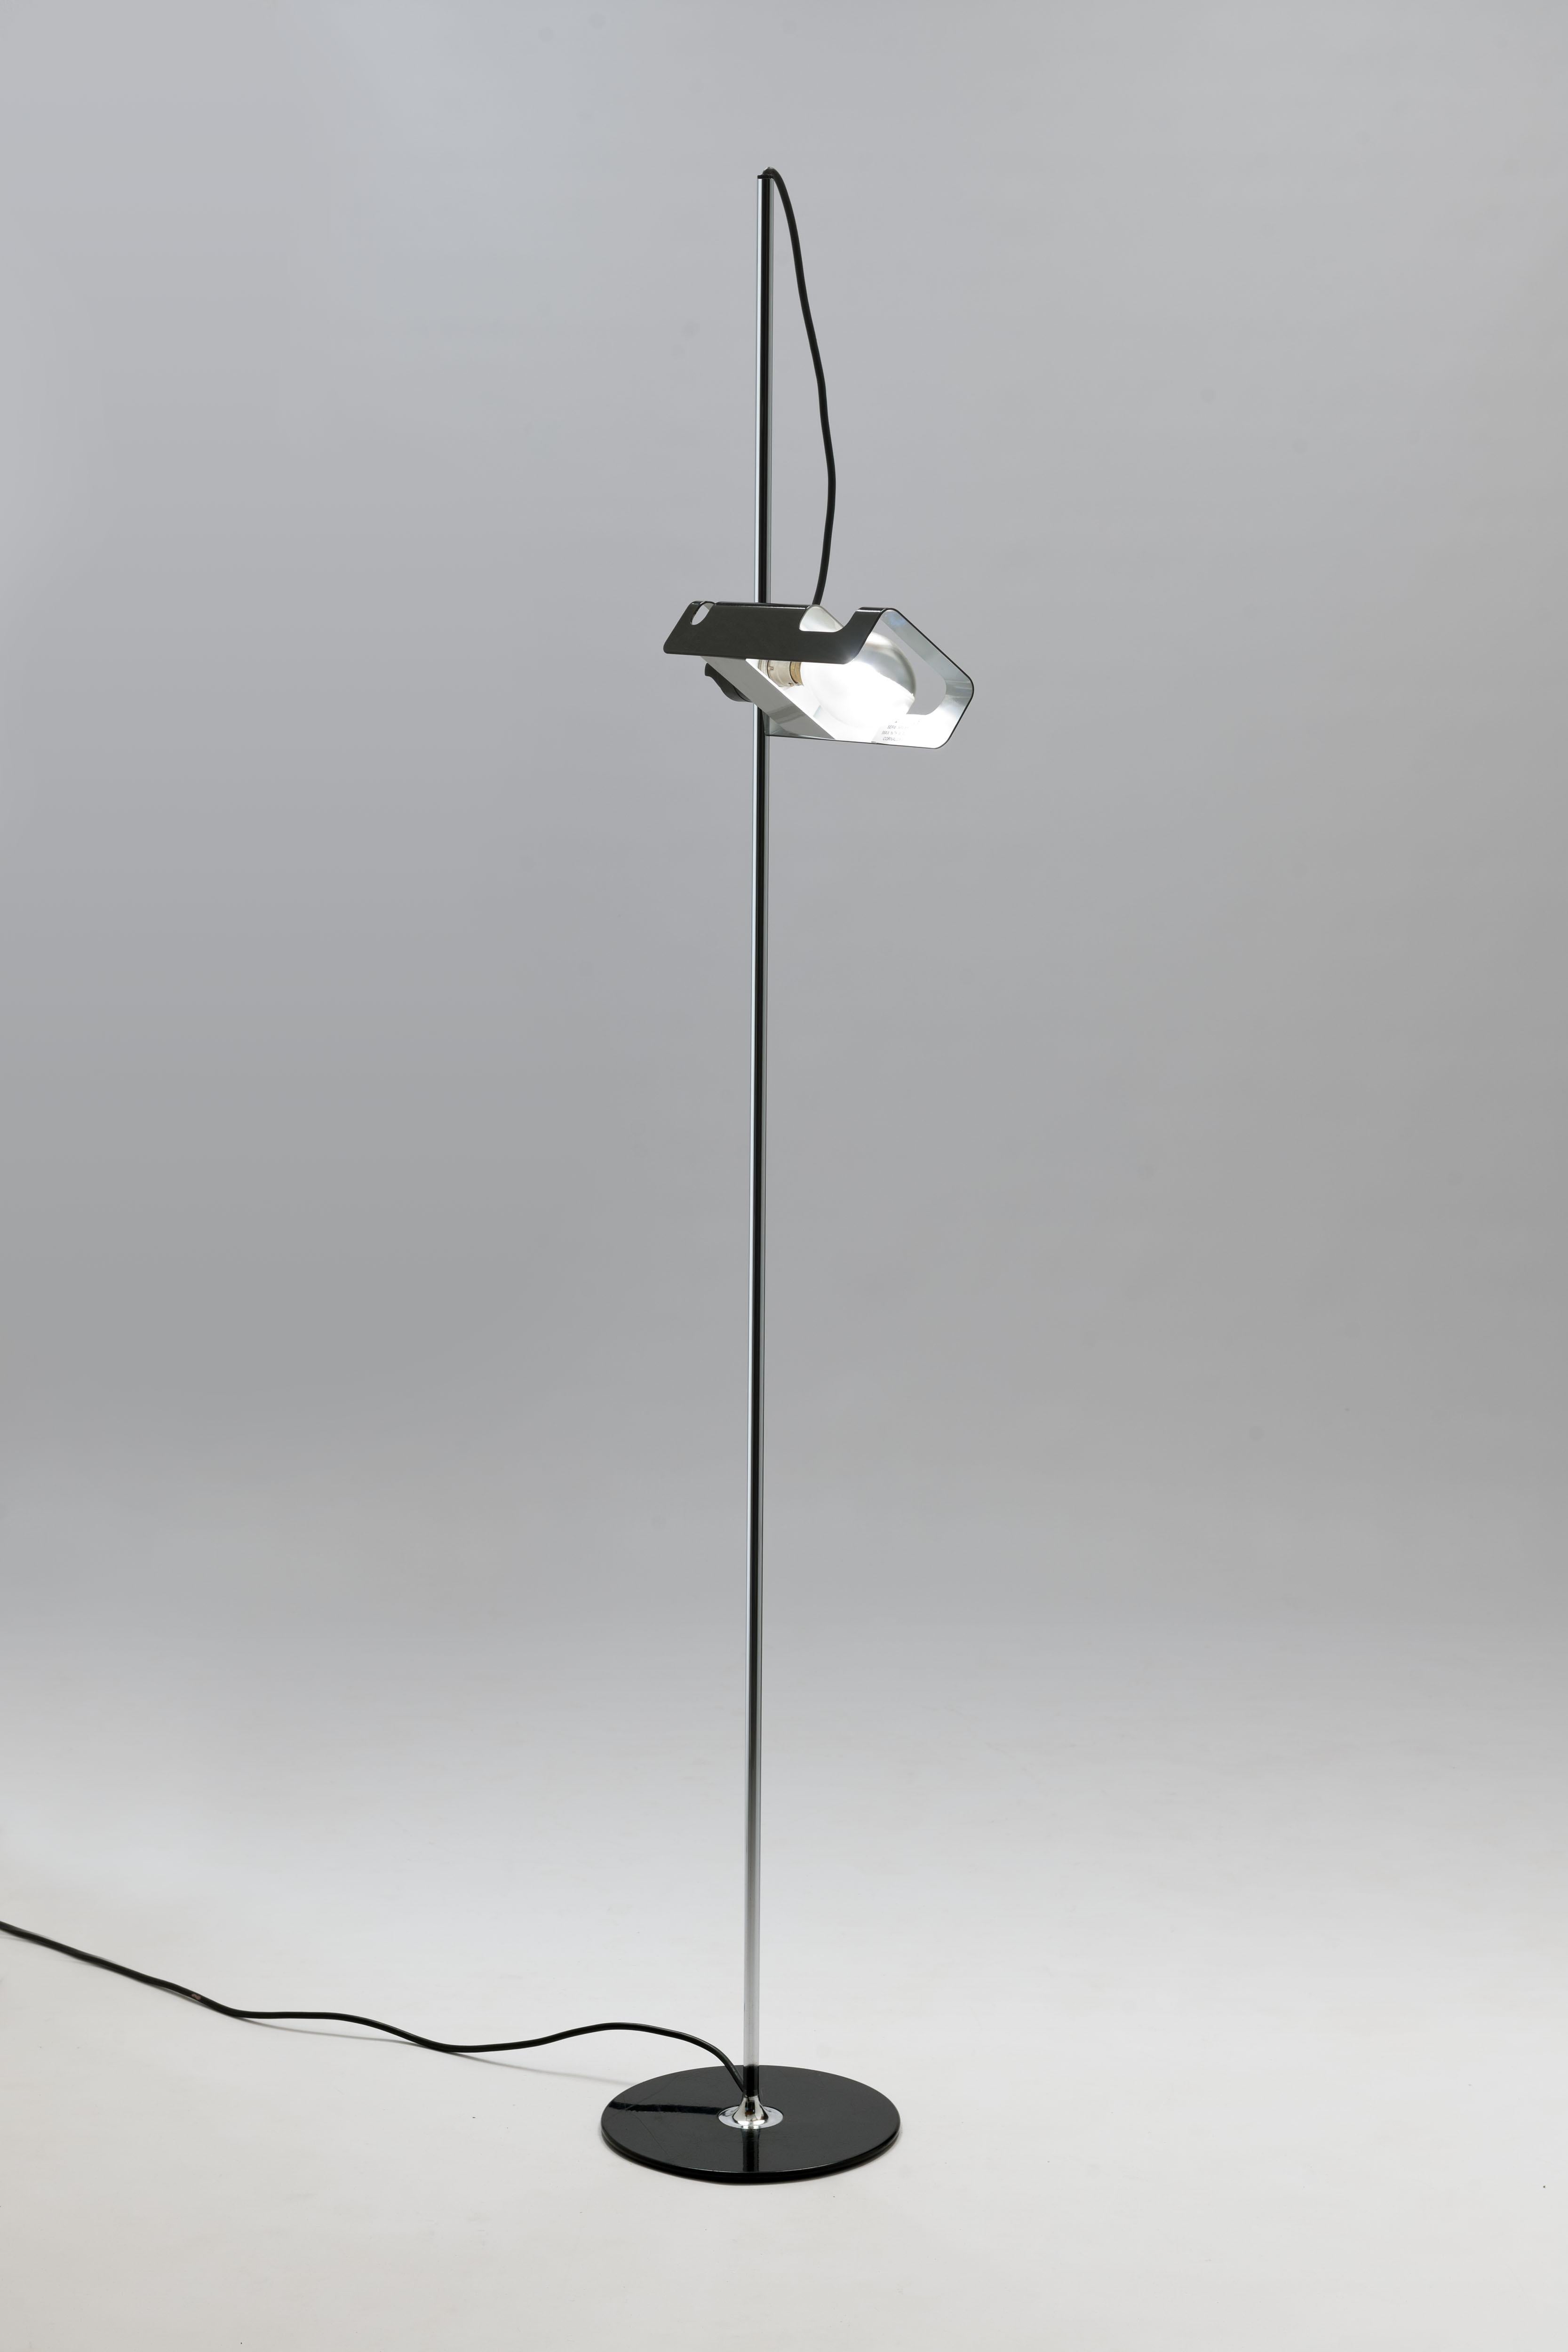 Steel Black Joe Colombo Spider Floor Lamp by Oluce, Italy, 1965